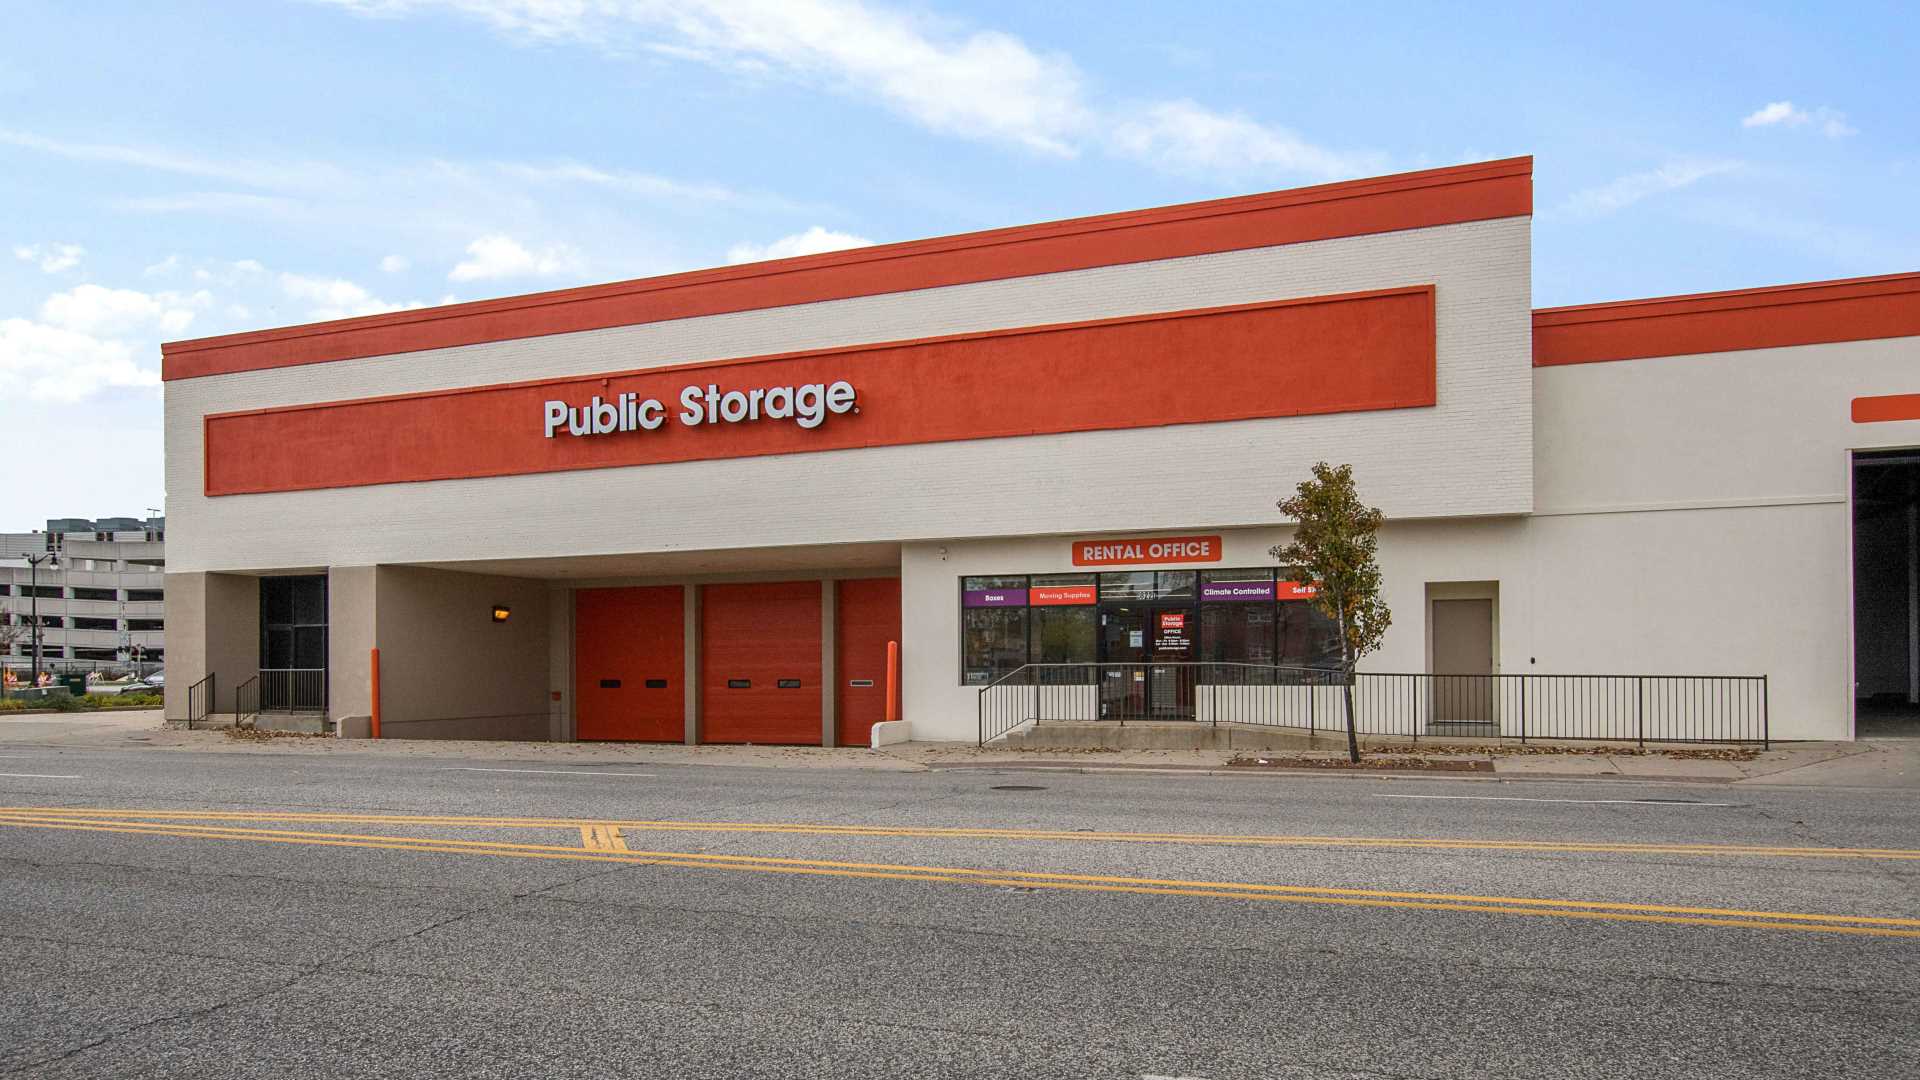 Public Storage